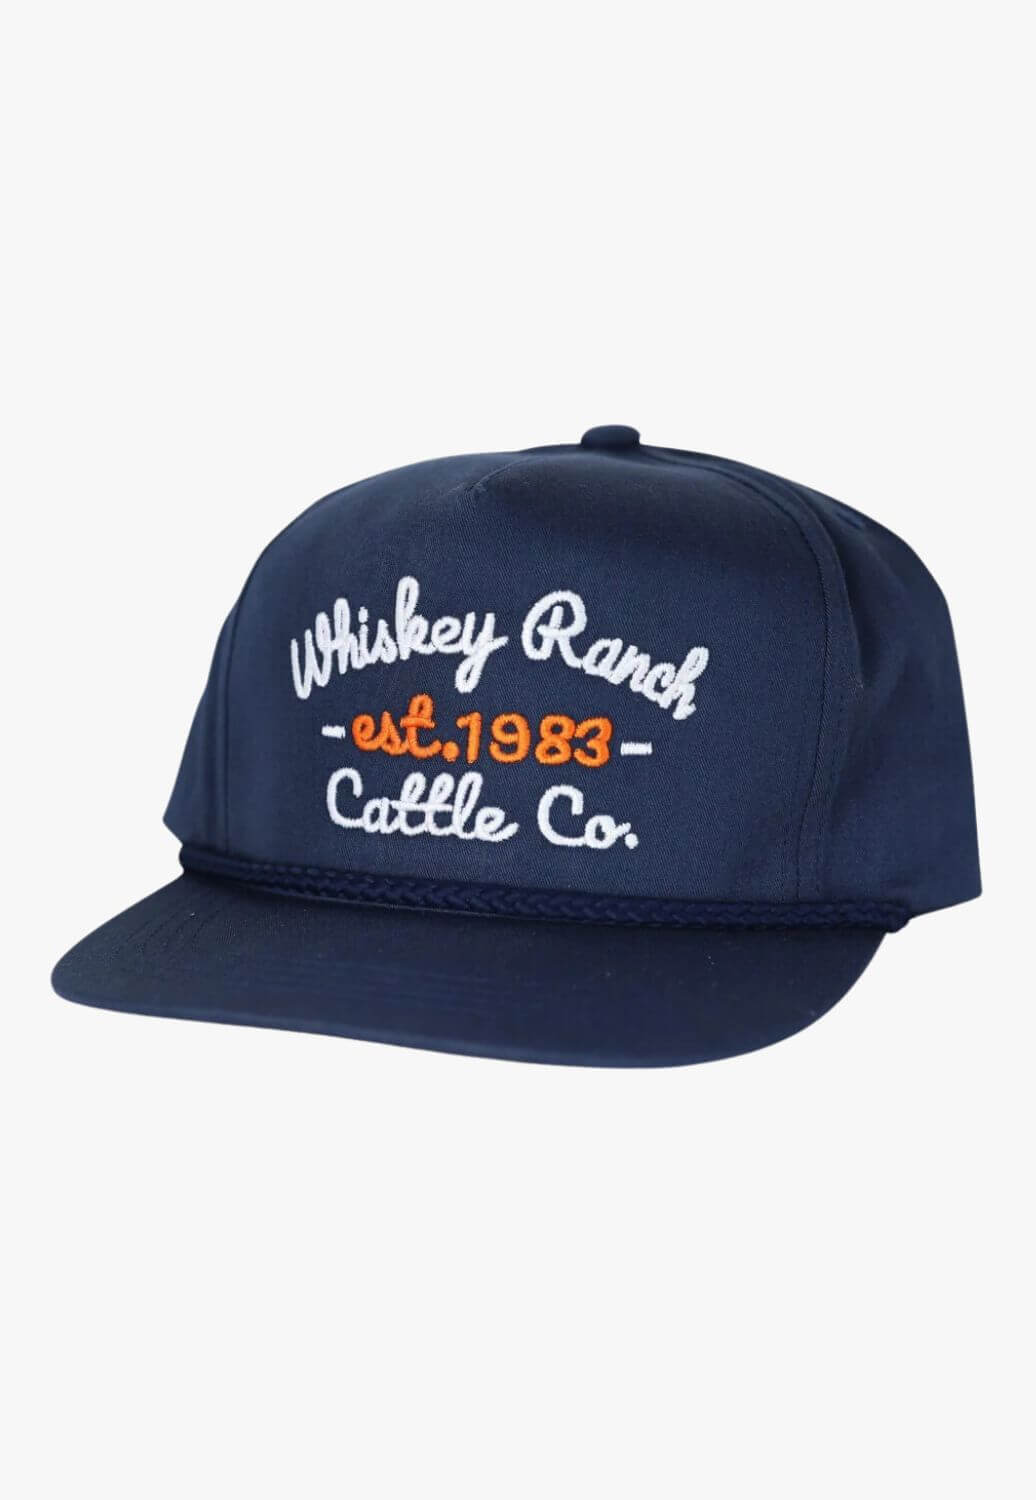 Whiskey Bent Hat Co The McCrae Cap